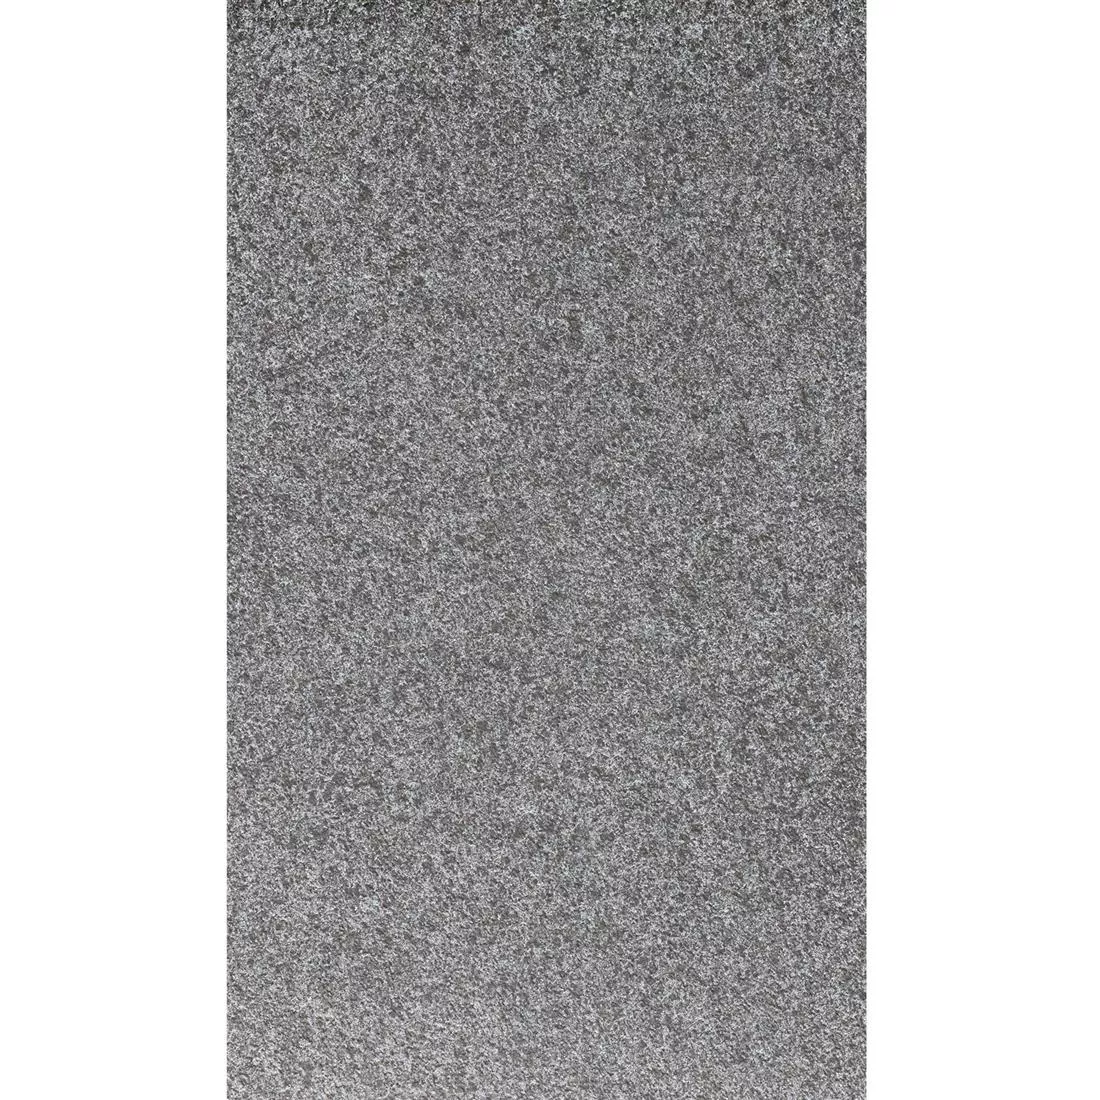 Terrasser Fliser Stoneway Naturstenoptik Sort 60x90cm